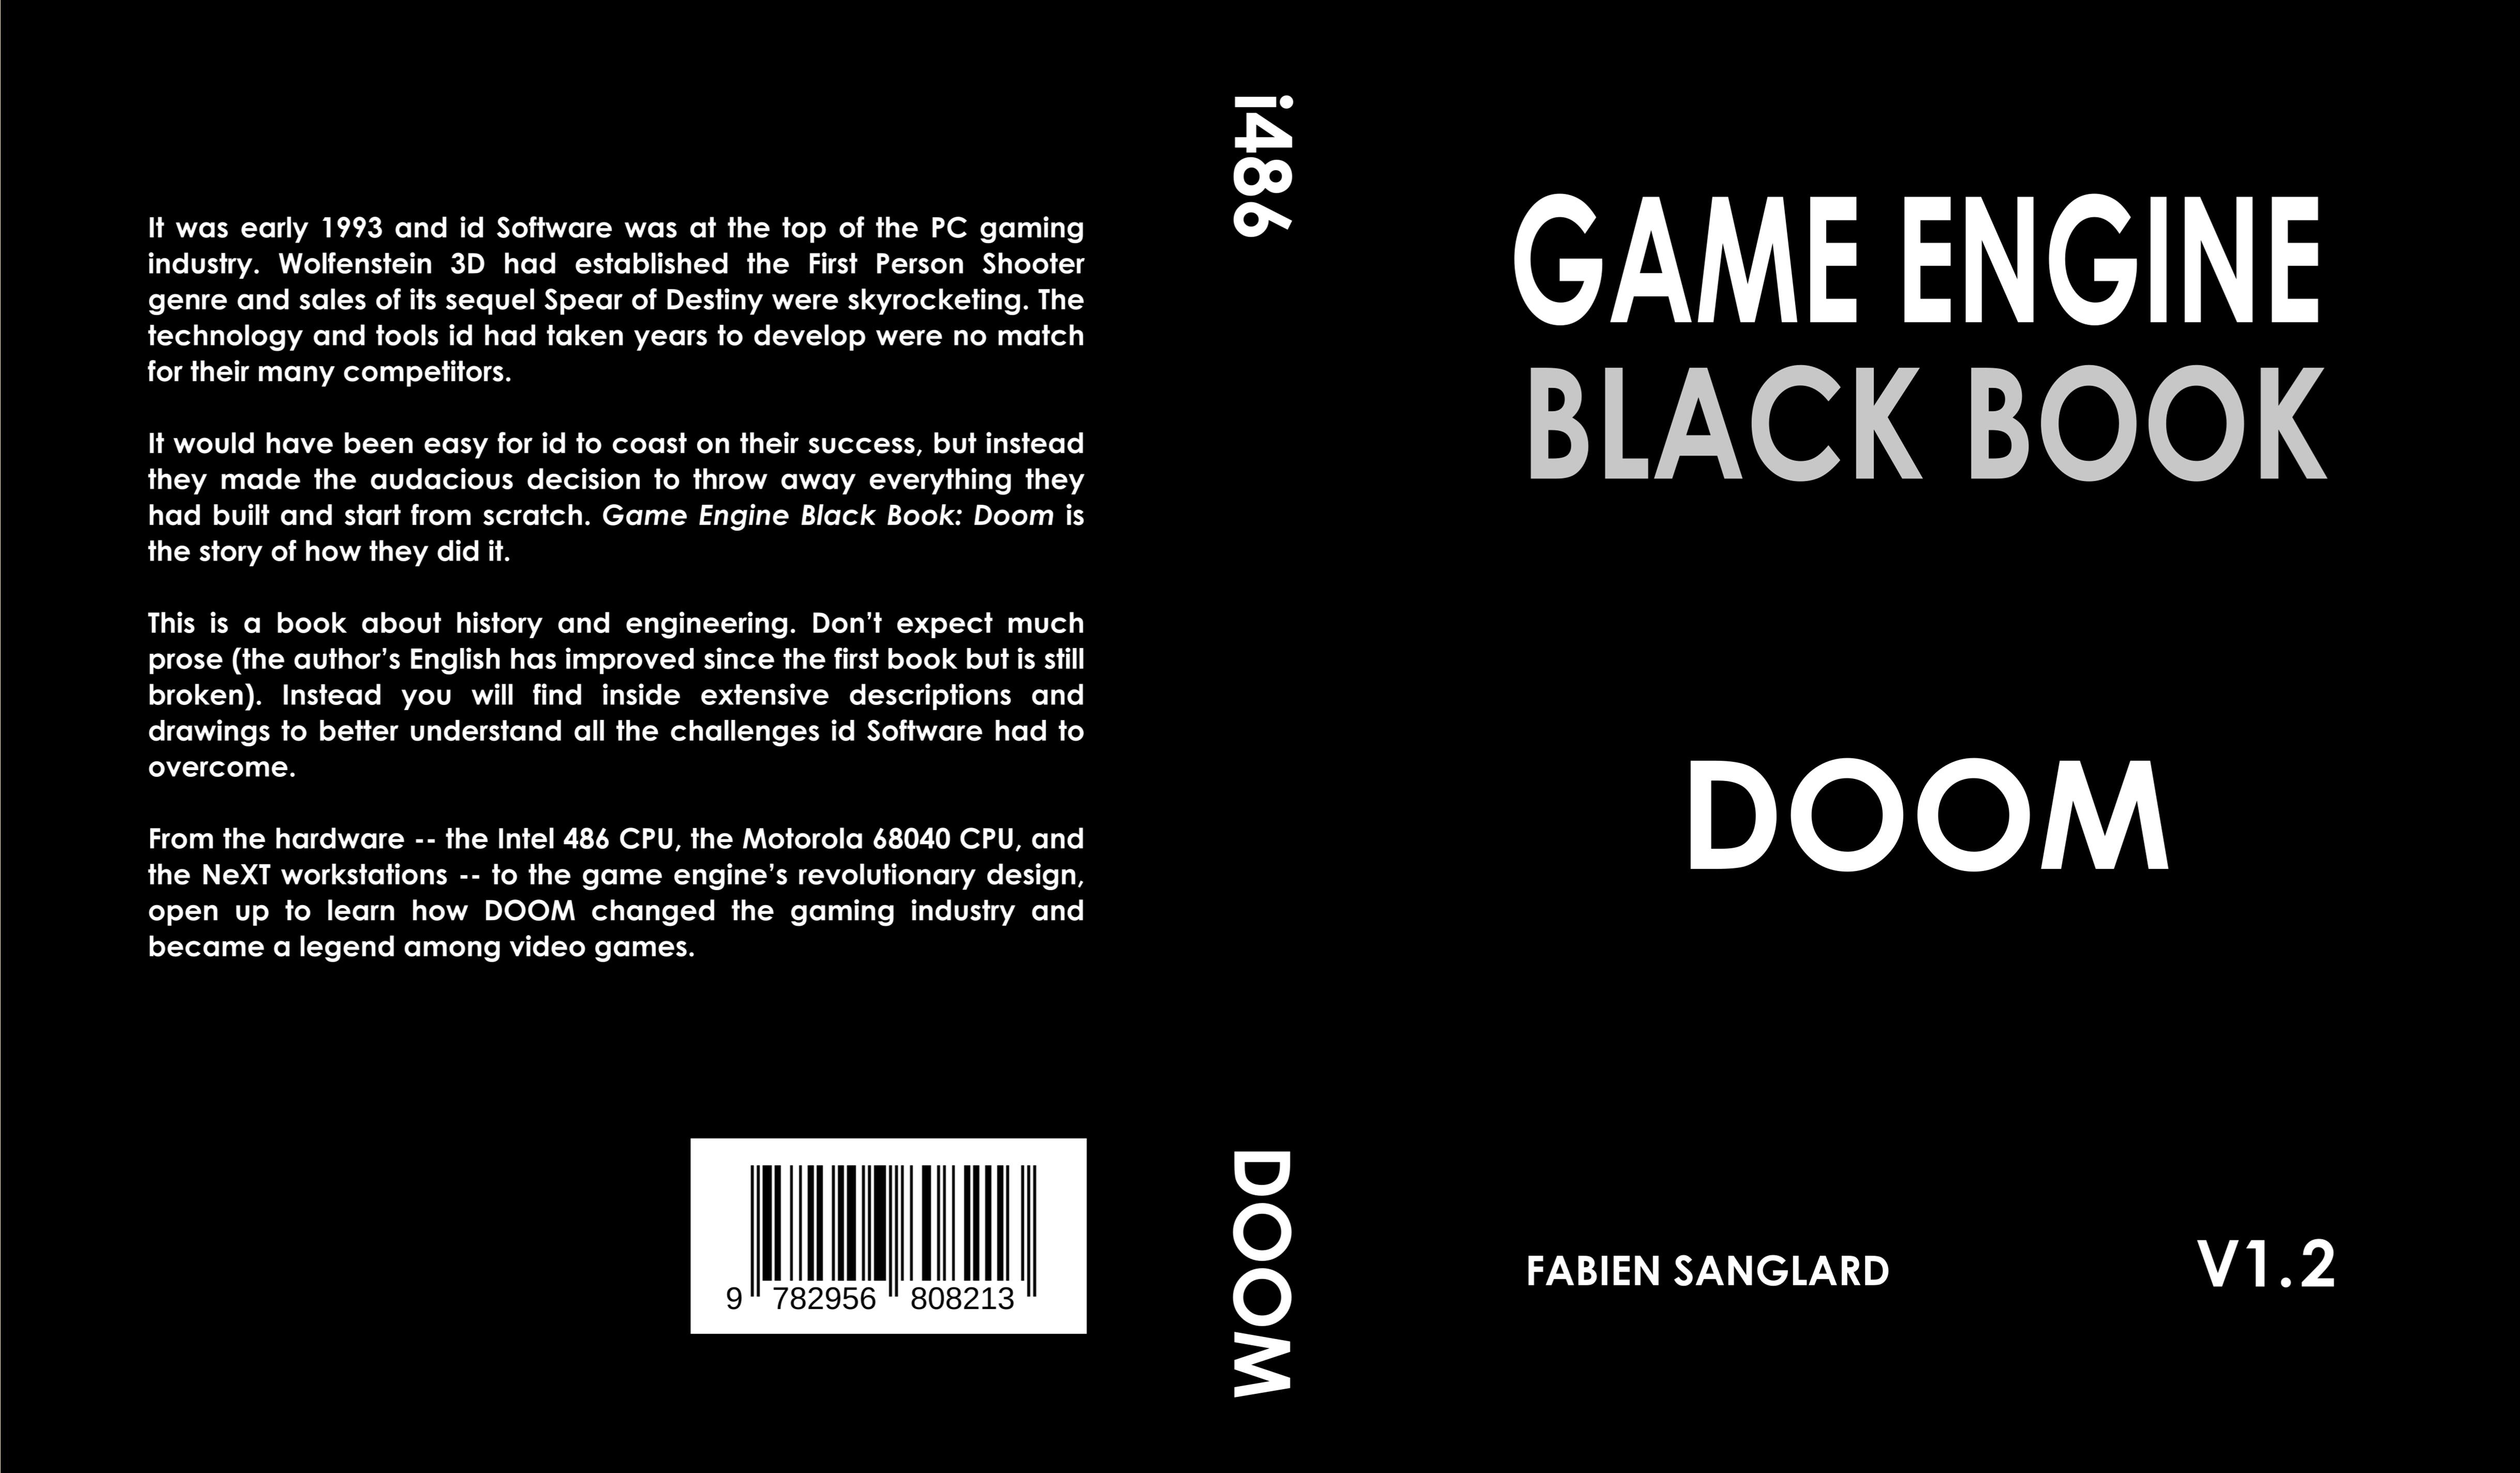 Game Engine Black Book: DOOM cover image